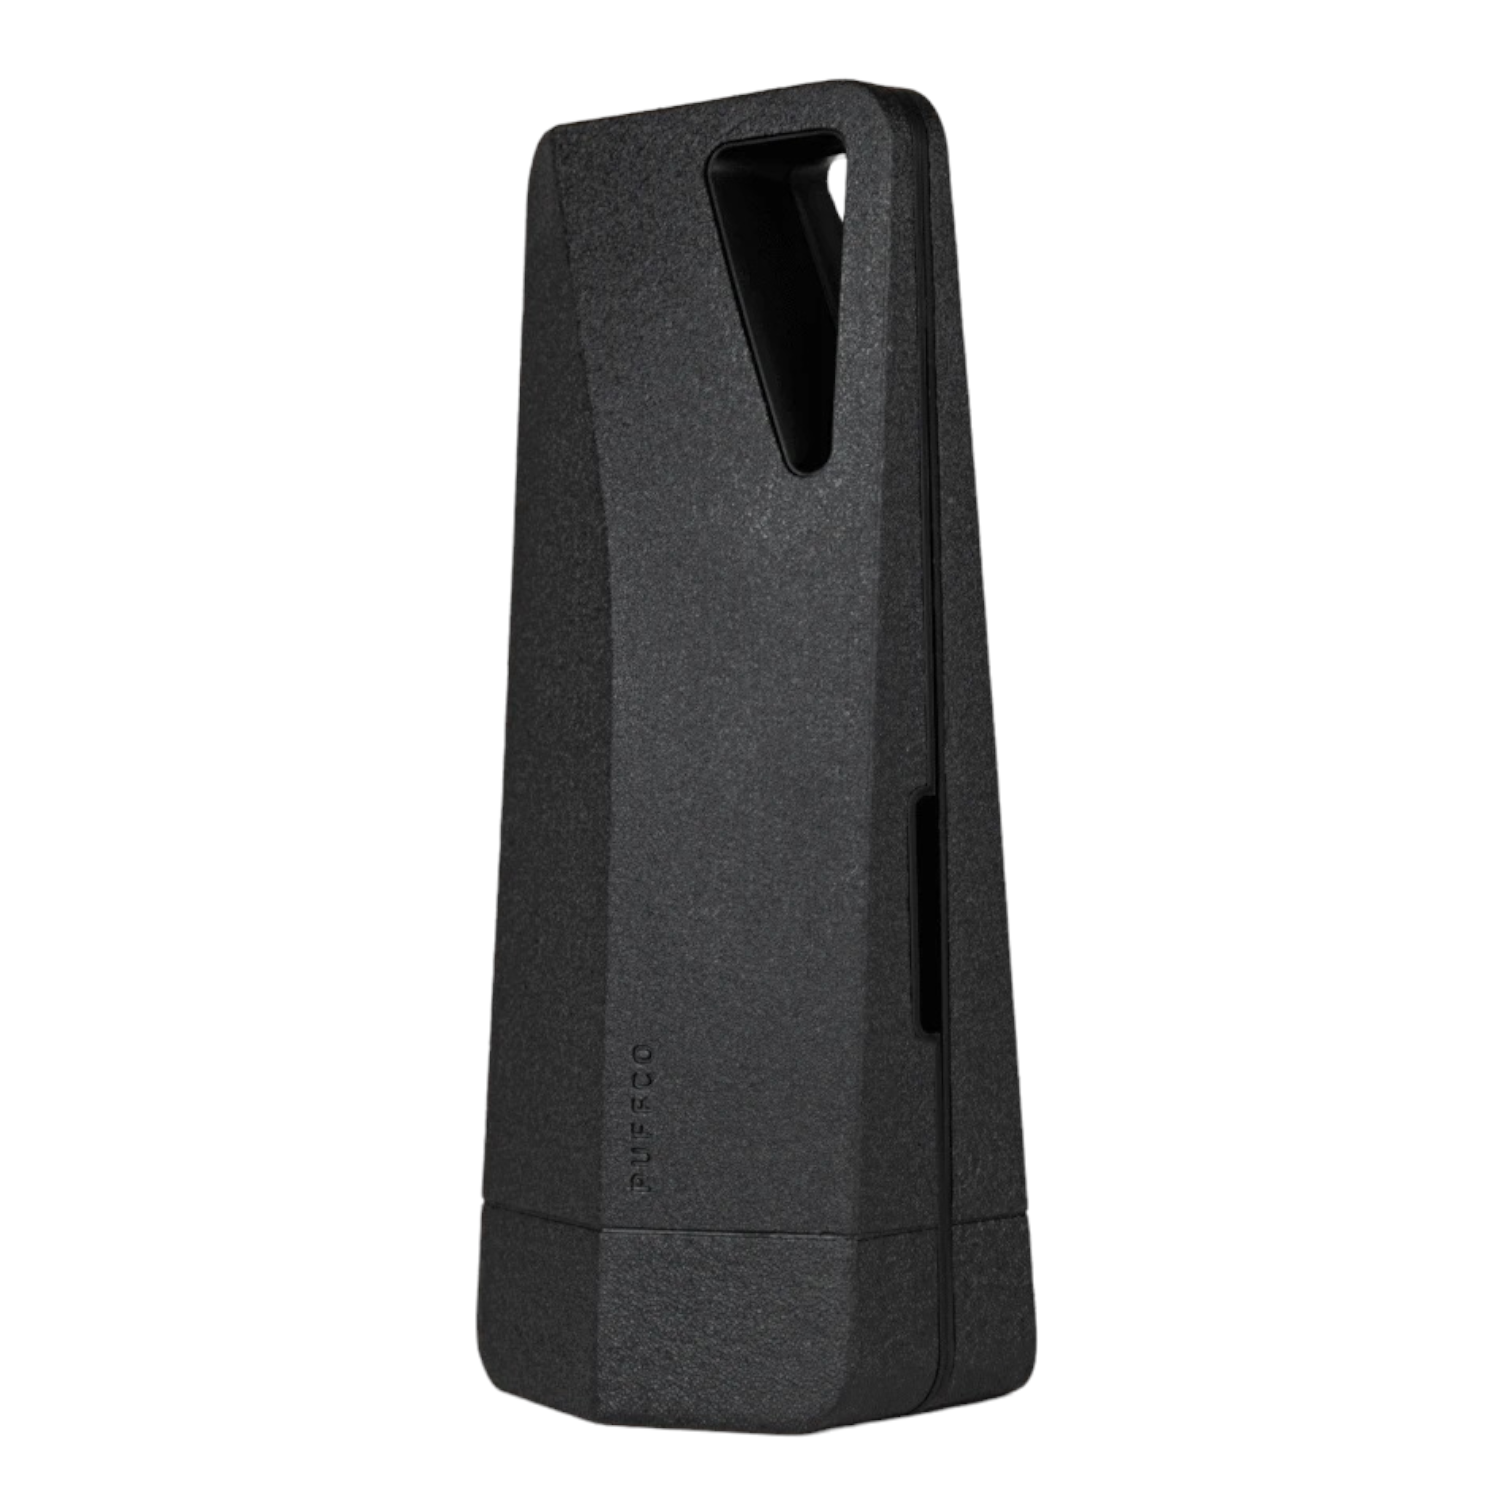 Puffco Peak Pro - Portable Wax Oil E-Rig hard case